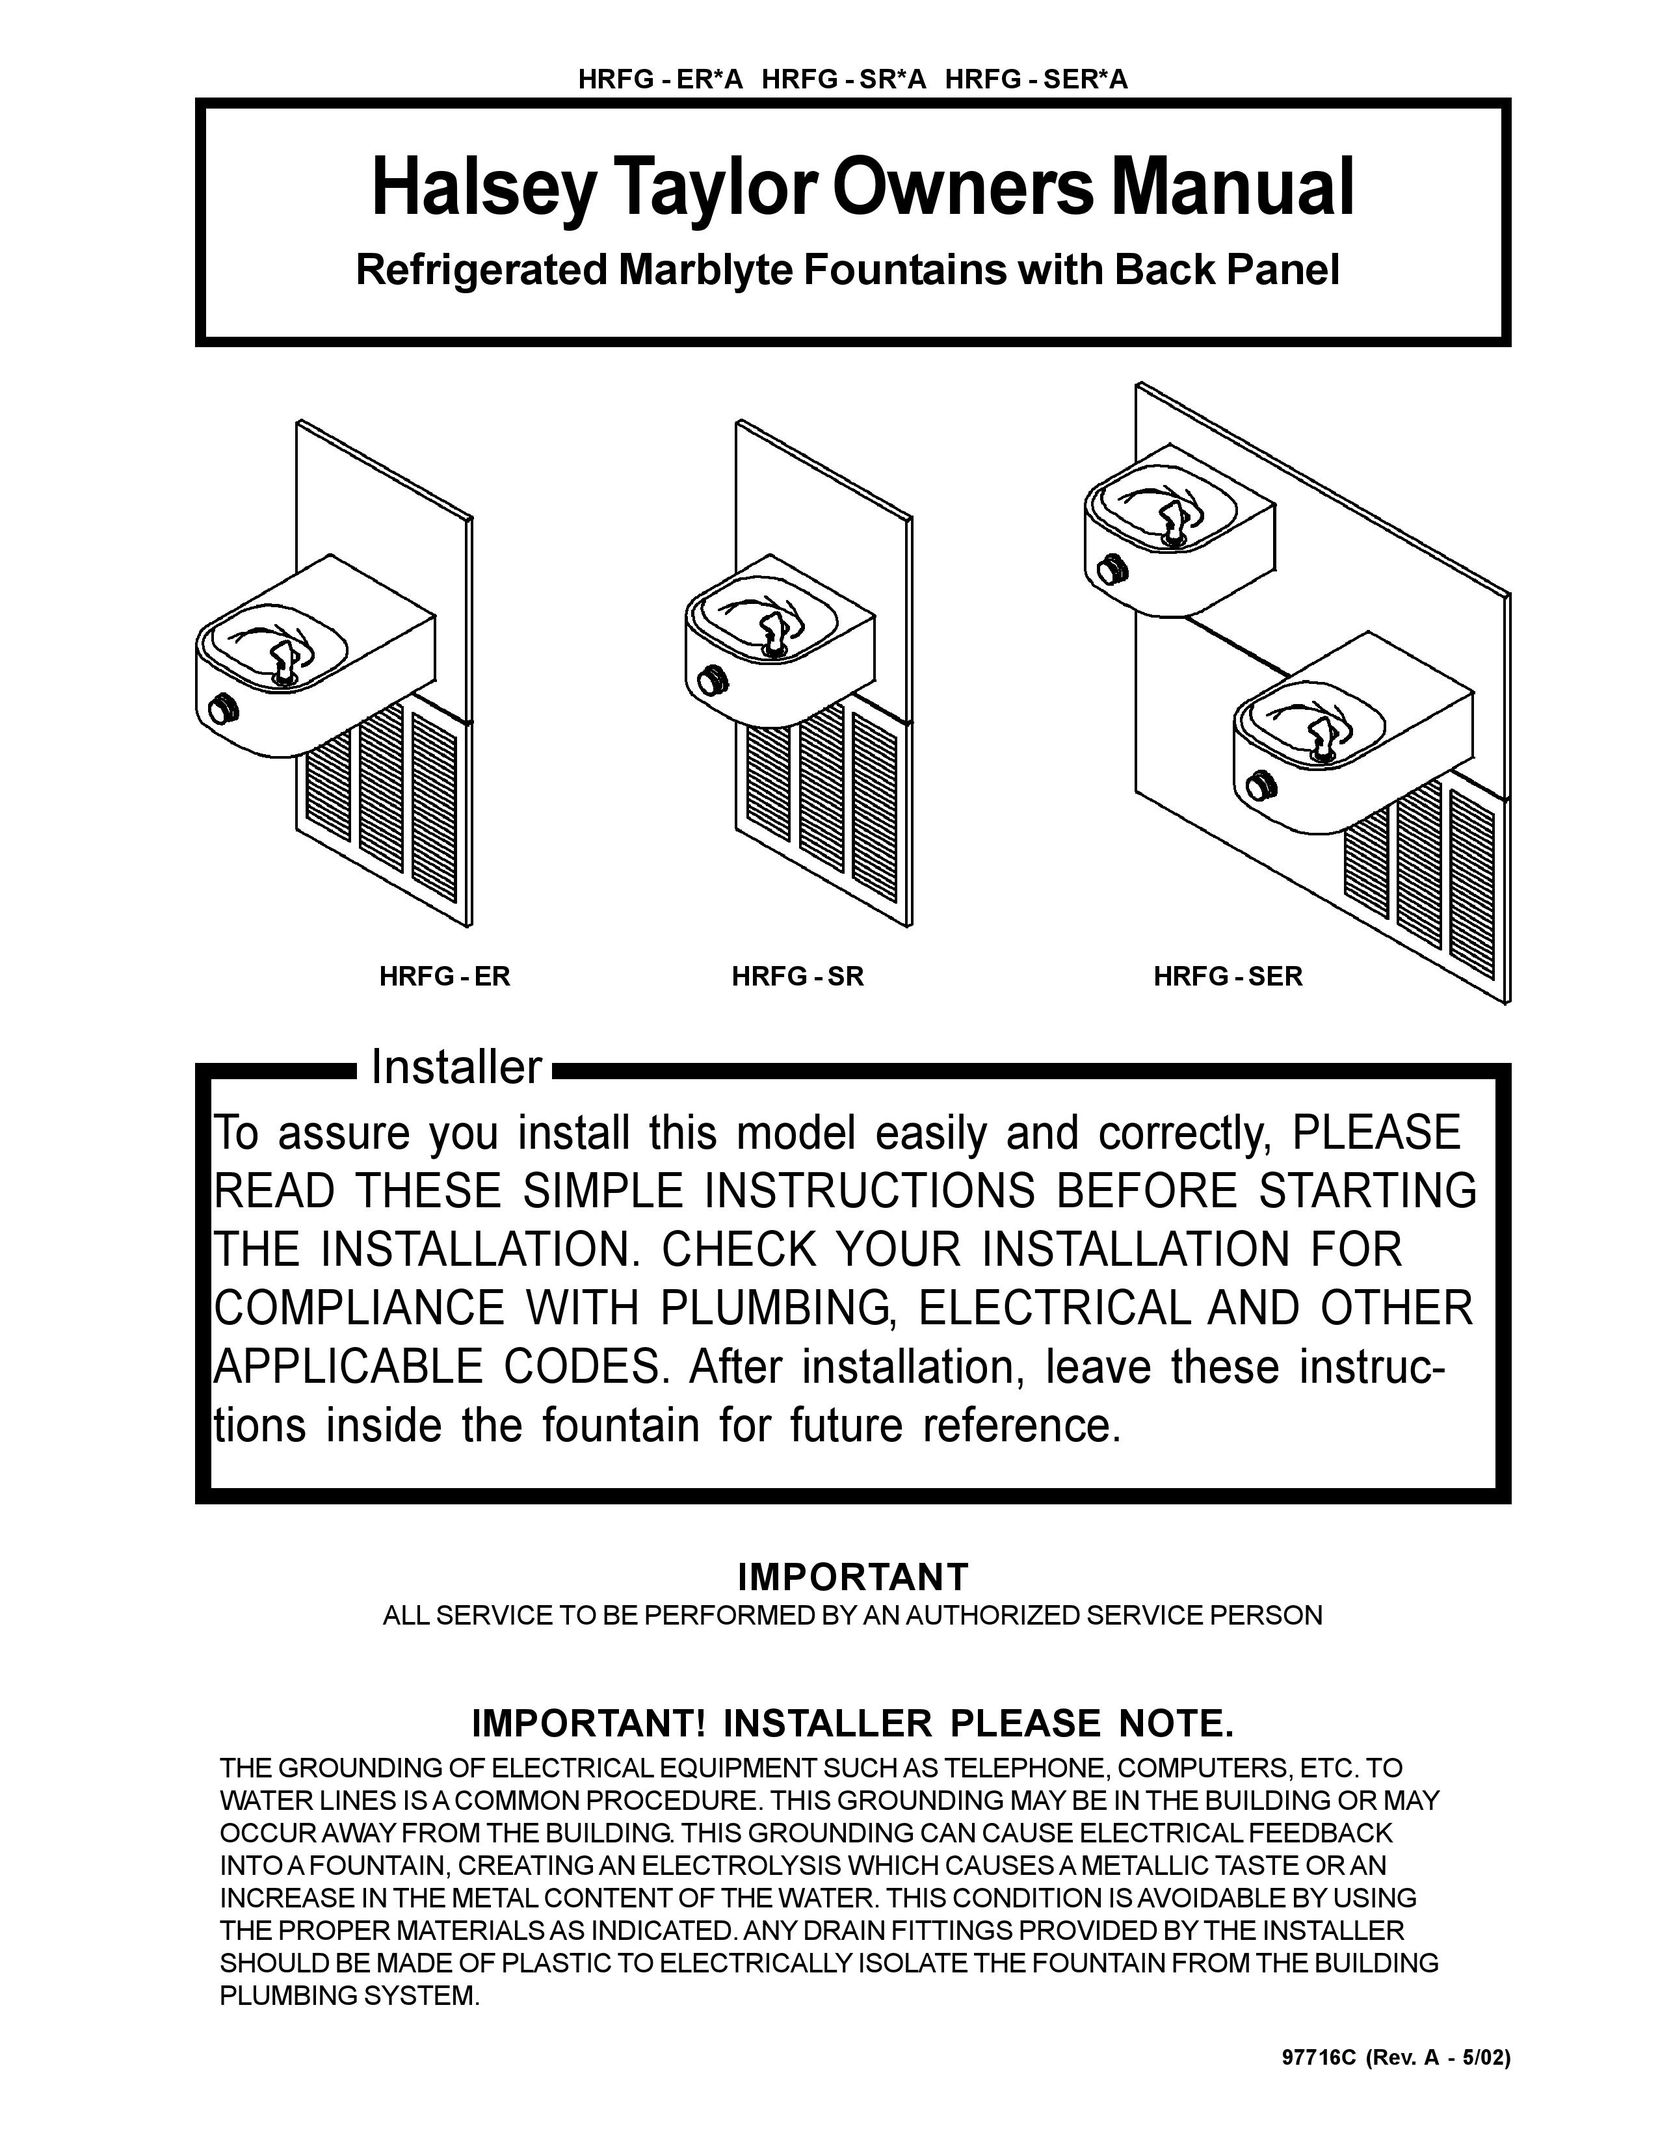 Halsey Taylor HRFG - SR*A Indoor Furnishings User Manual